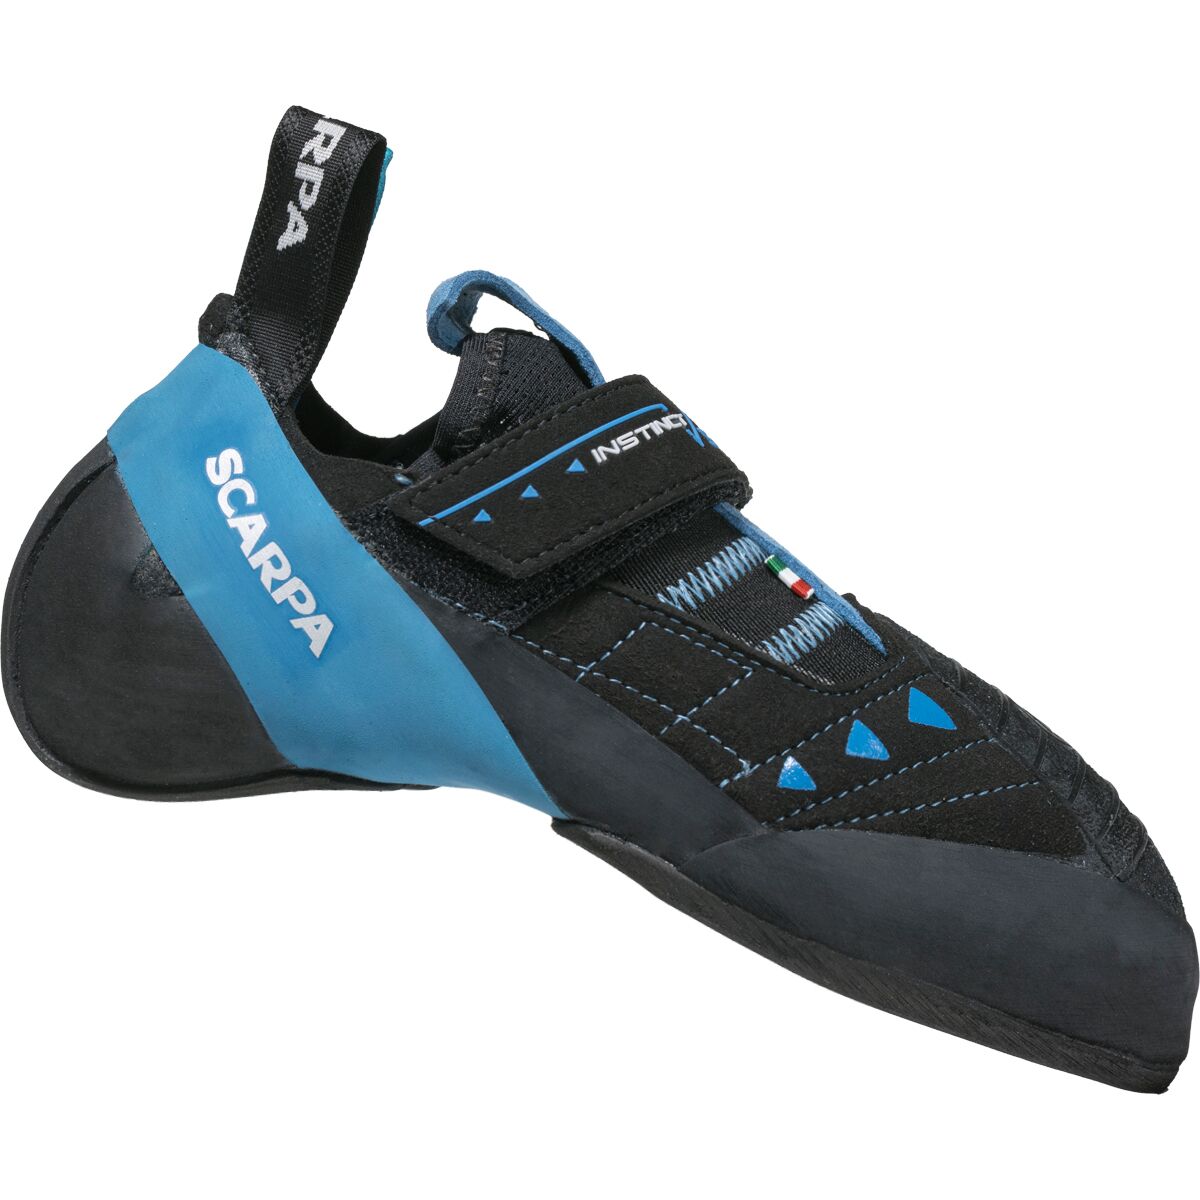 Scarpa Instinct VSR Climbing Shoe Black/Azure, 38 EU/6 M US